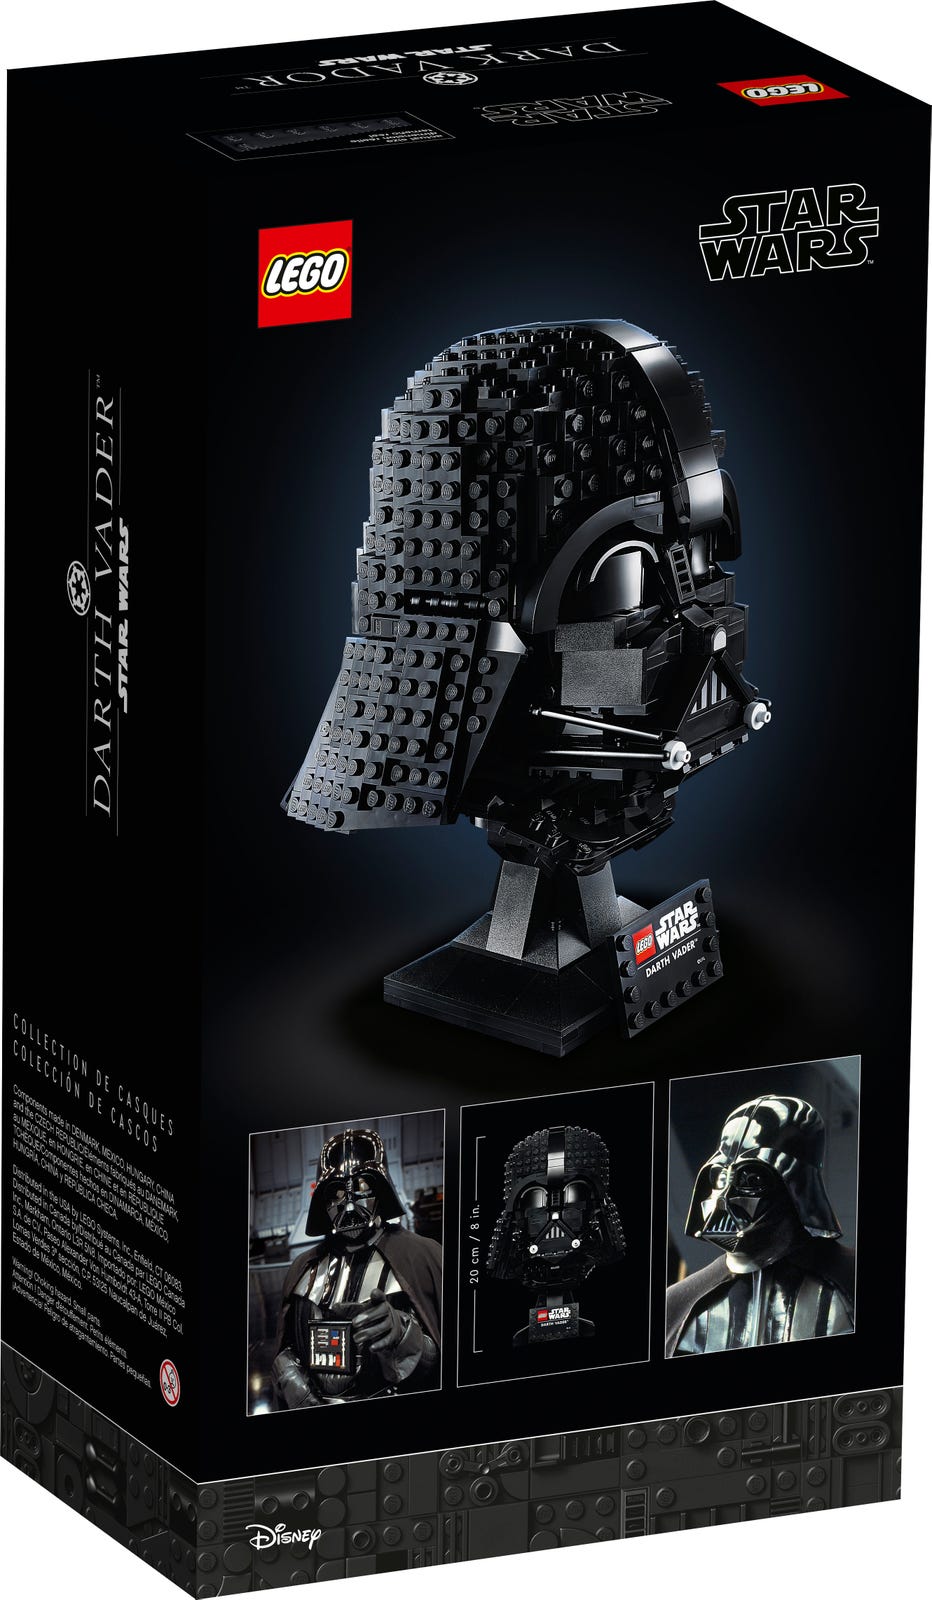 LEGO® Star Wars™ 75304 - Darth Vader™ Helm